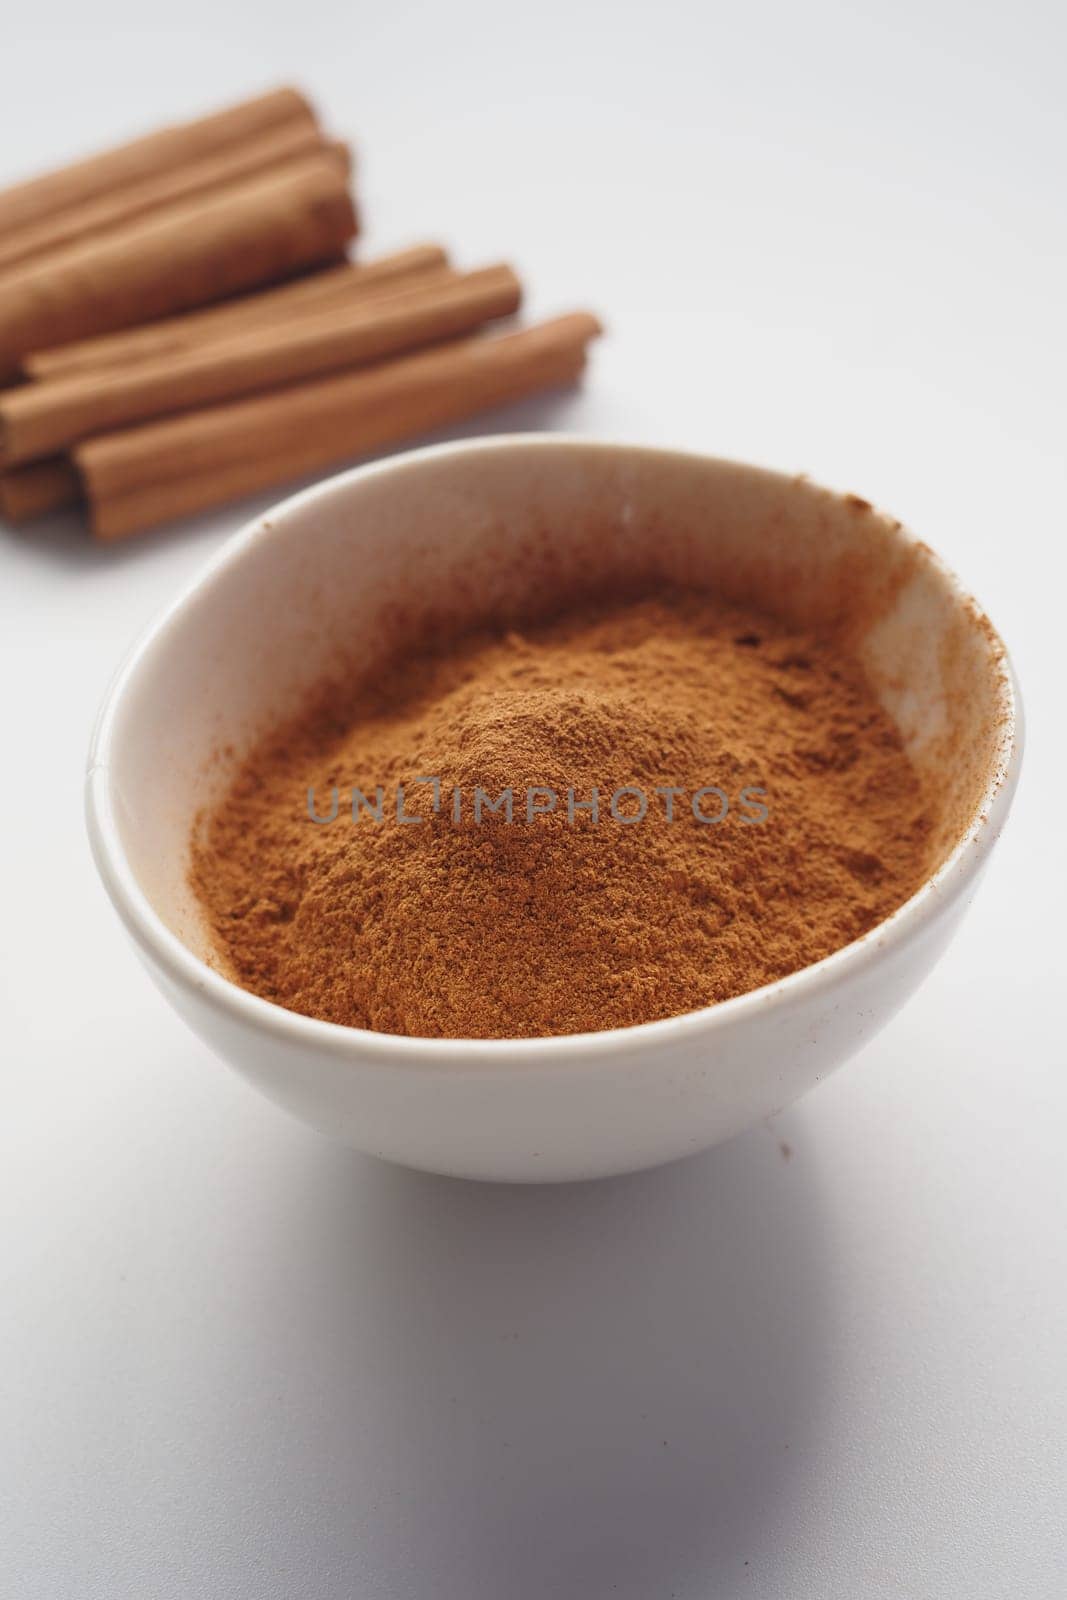 Cinnamon sticks and cinnamon powder on white background